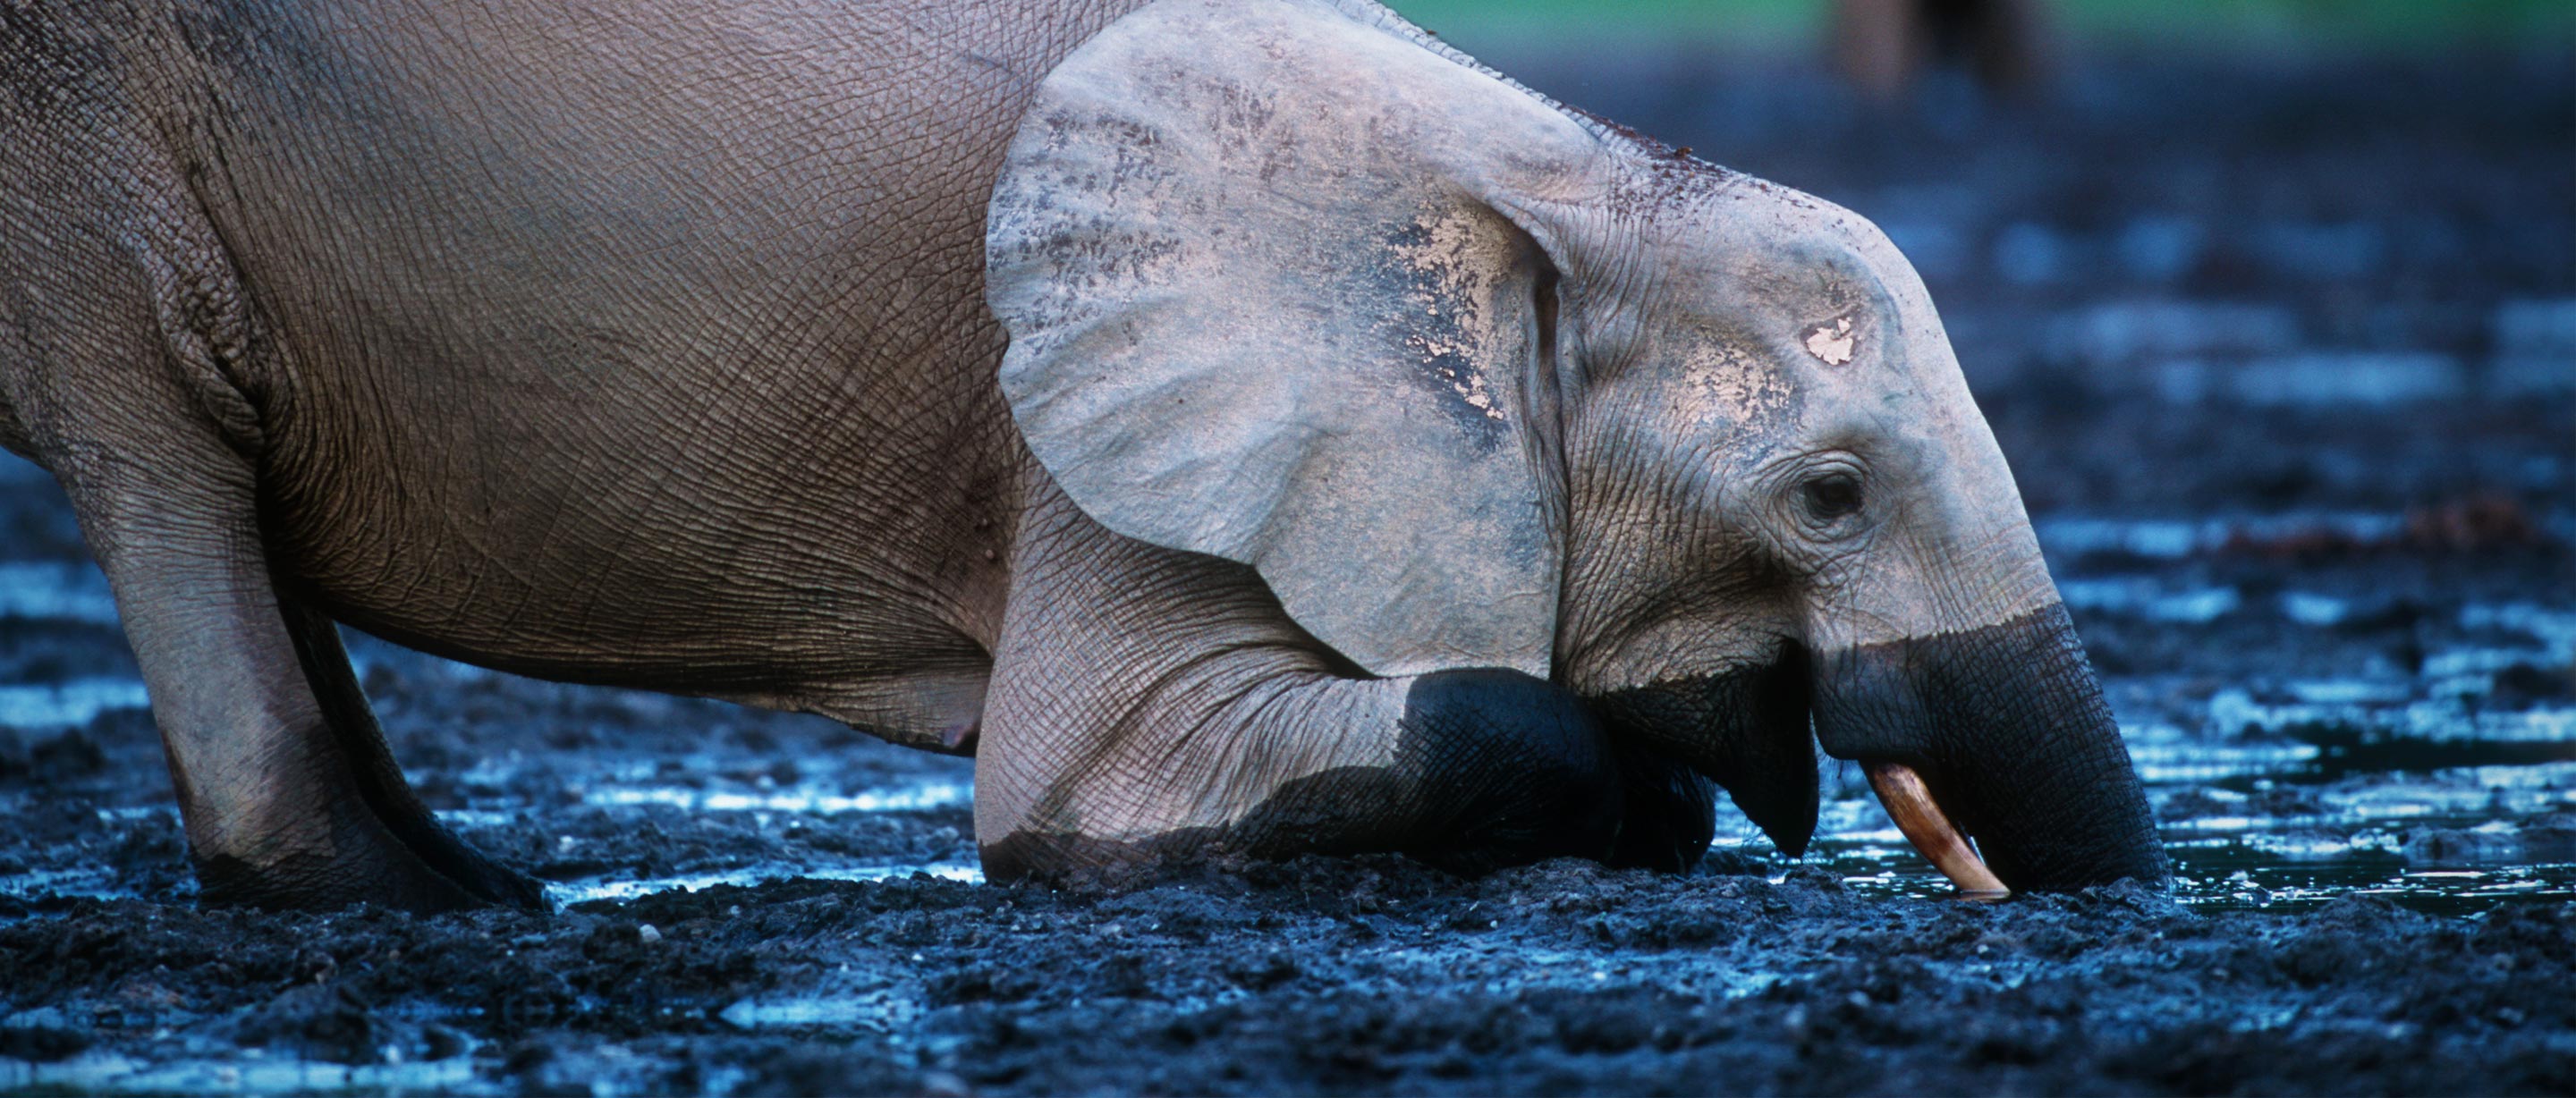 Forest Elephant | African Wildlife Foundation